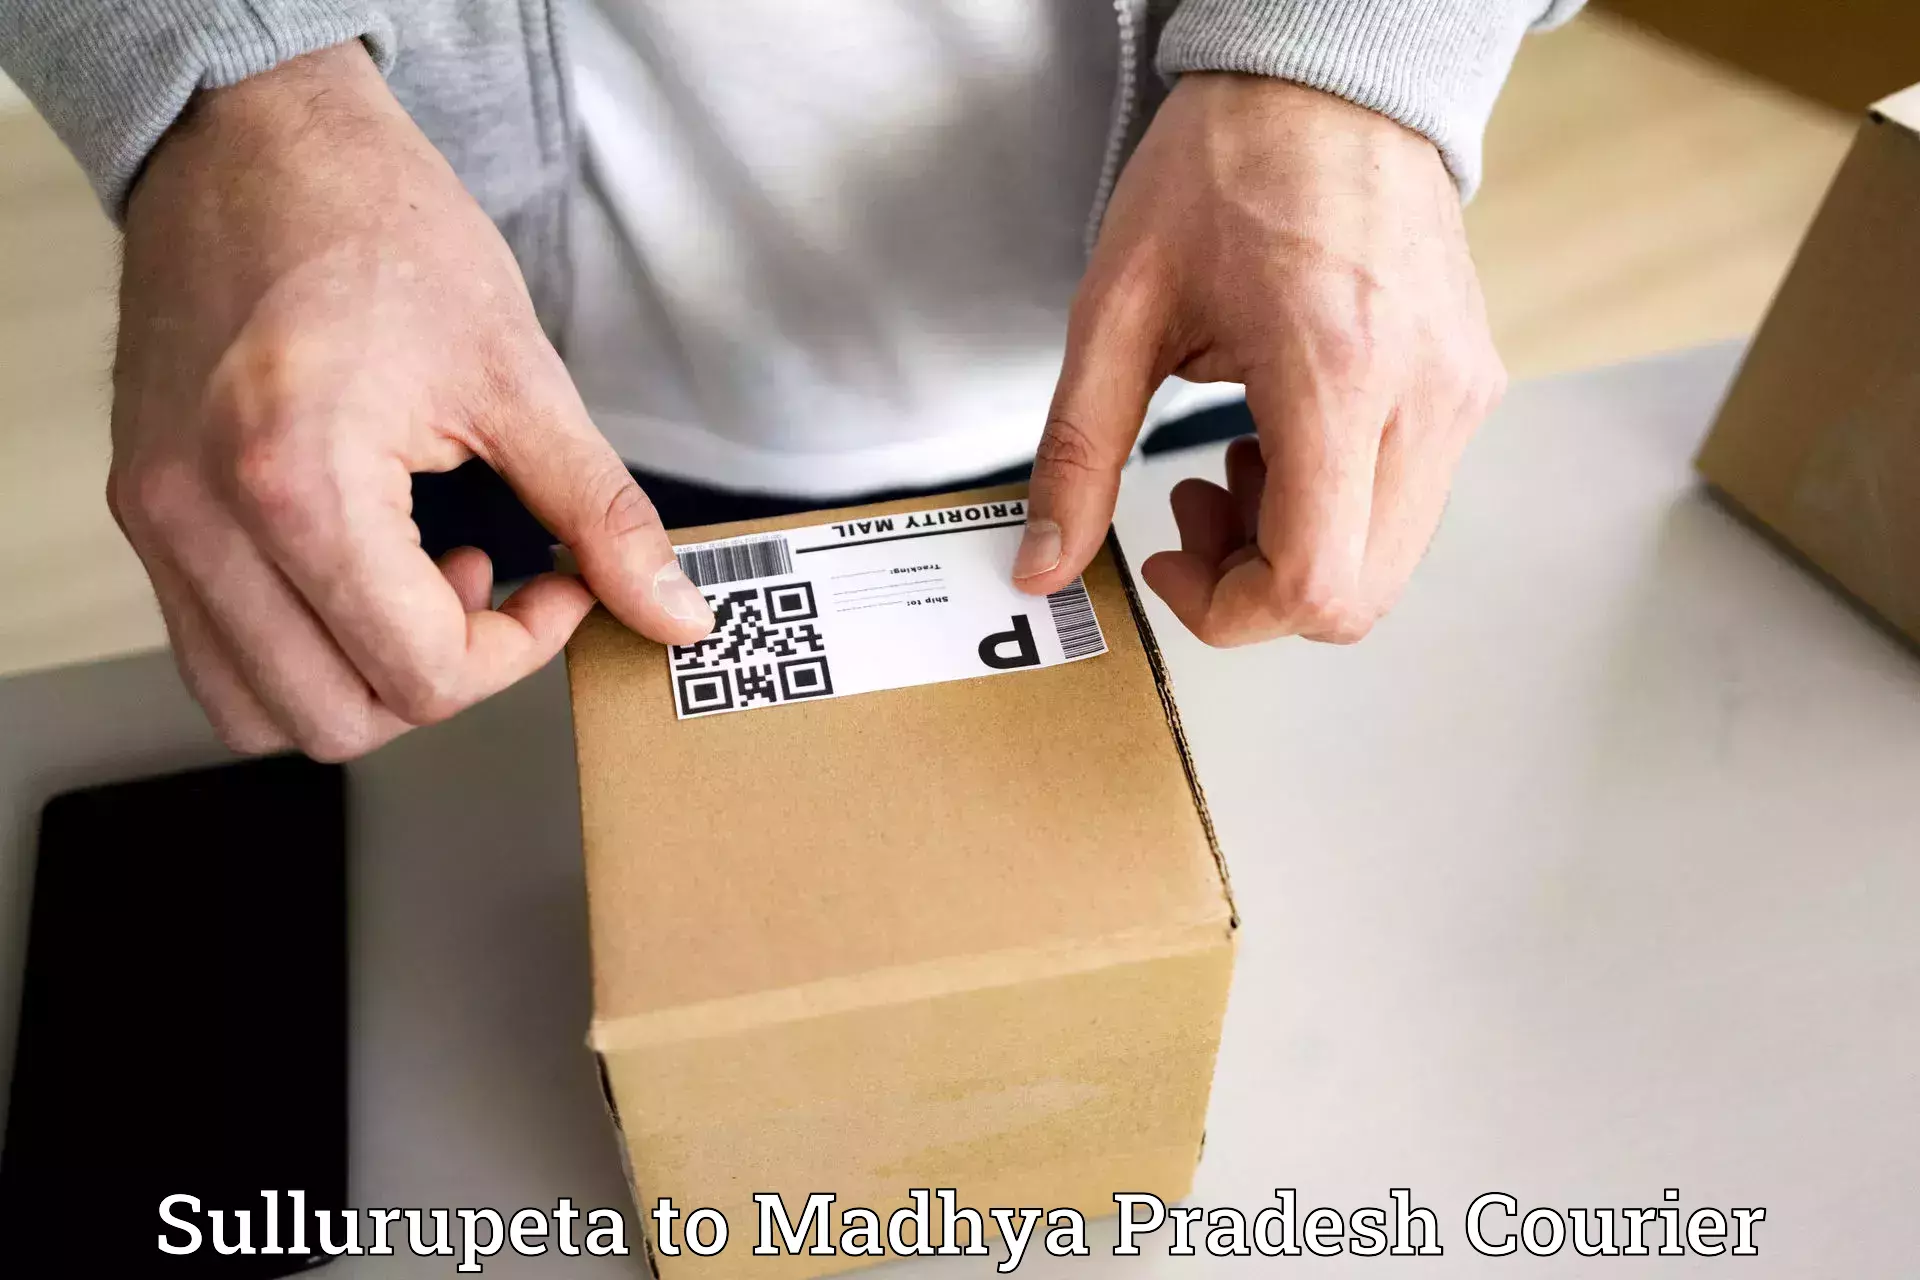 Professional courier handling Sullurupeta to Nainpur